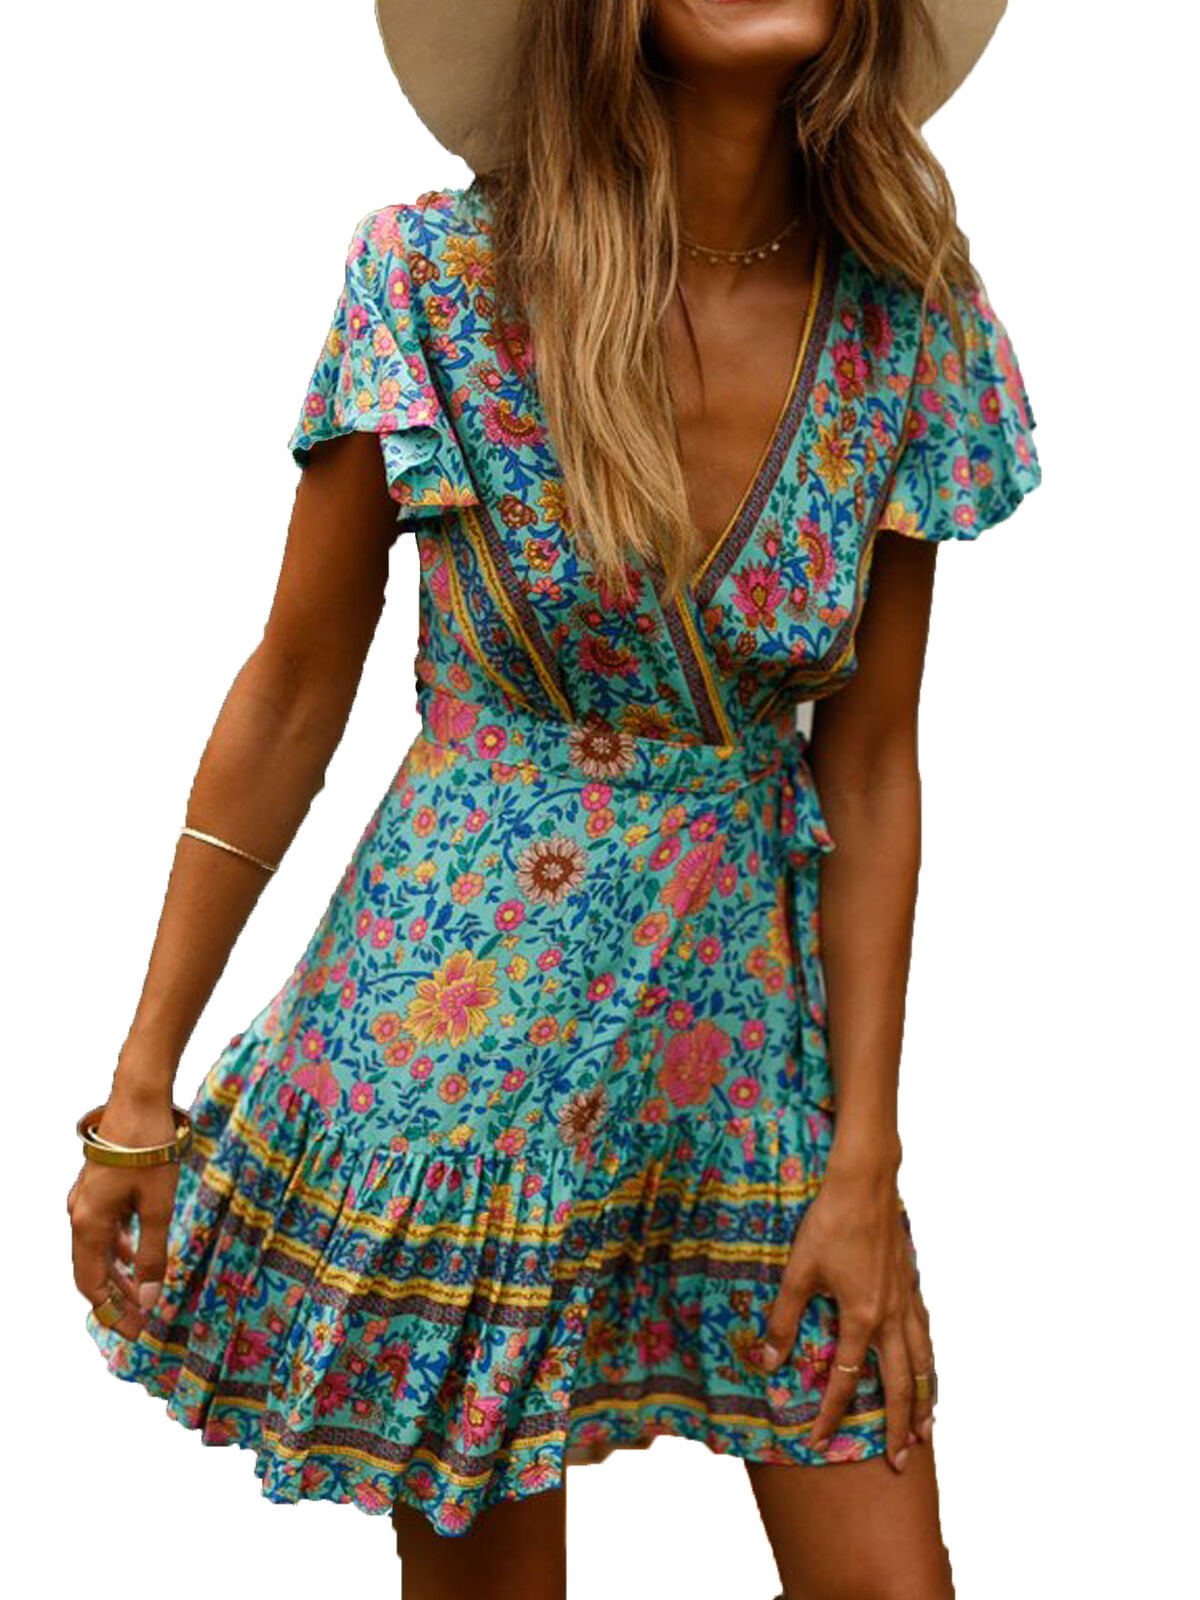 Ehpow Women V Neck Boho Floral Mini Dress Summer Short Sleeve Wrap Sash Beach Dress